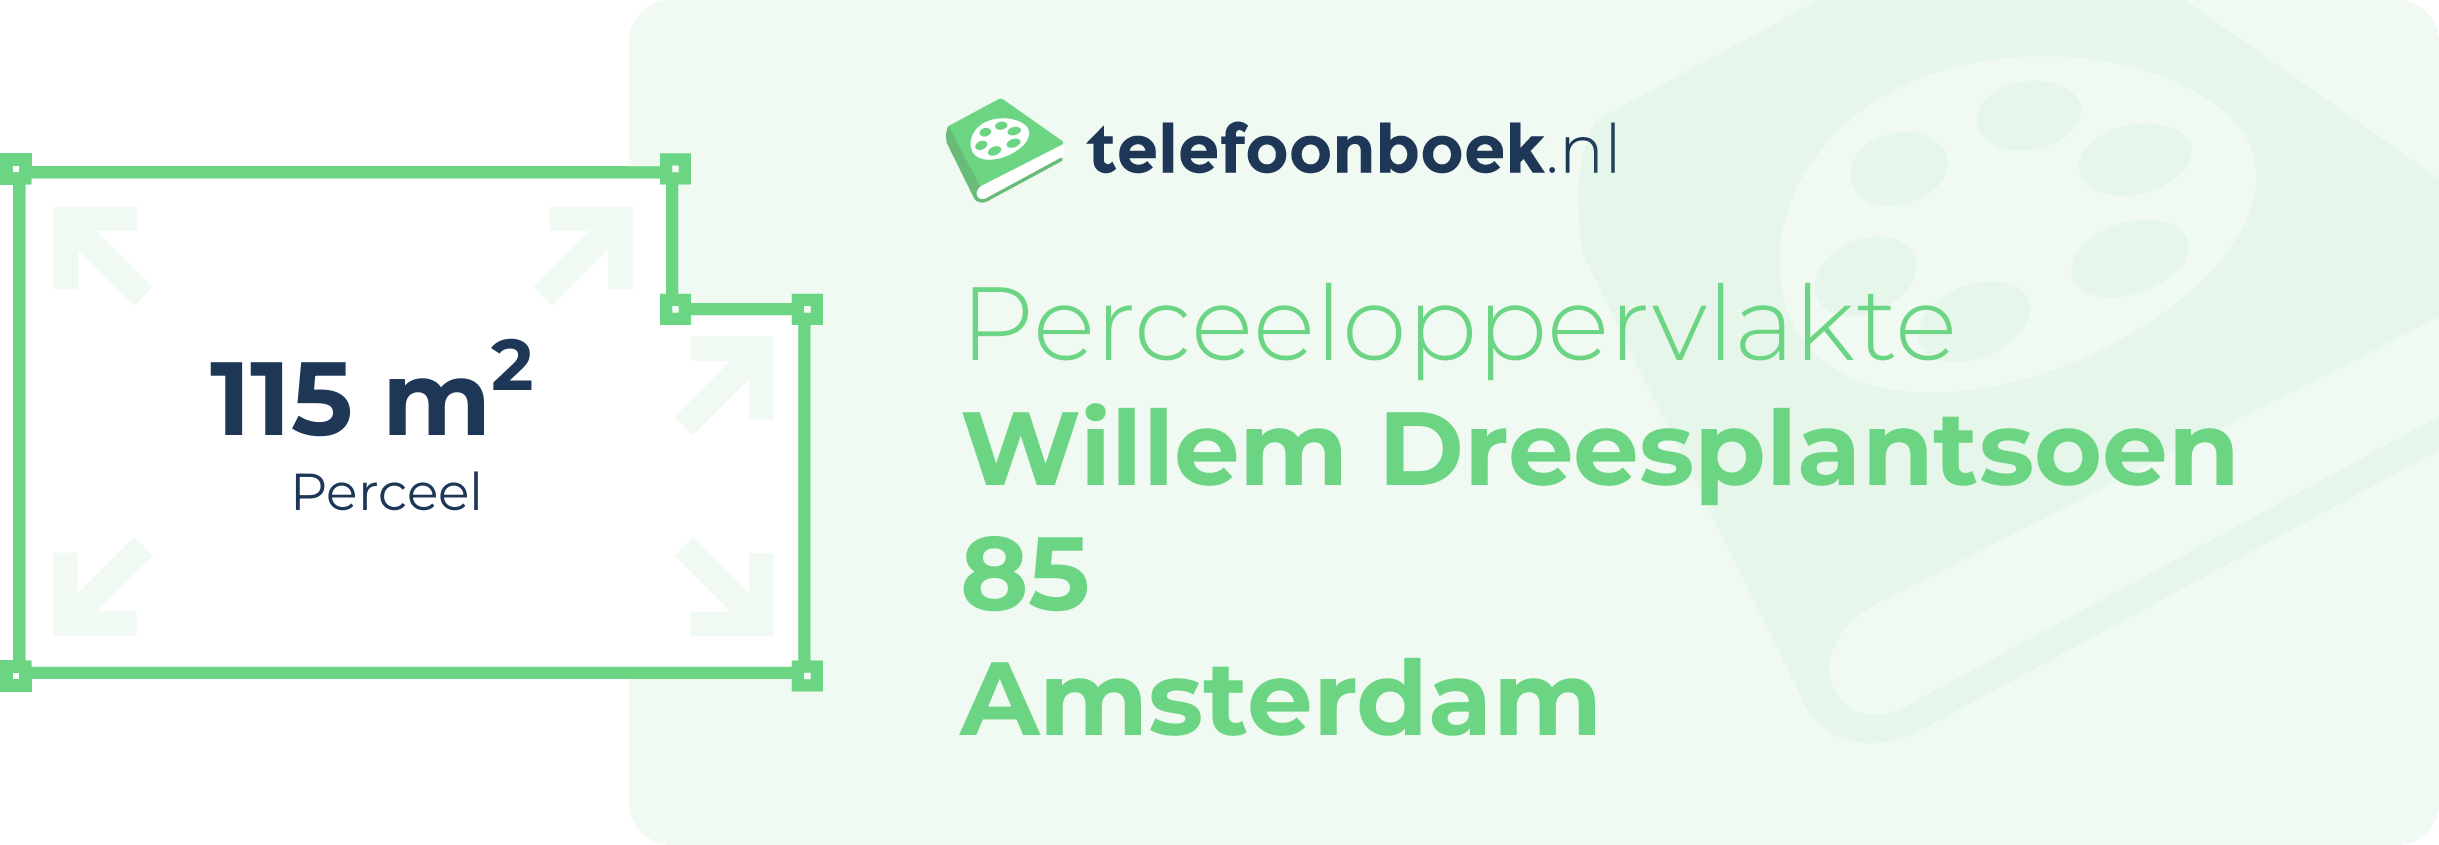 Perceeloppervlakte Willem Dreesplantsoen 85 Amsterdam